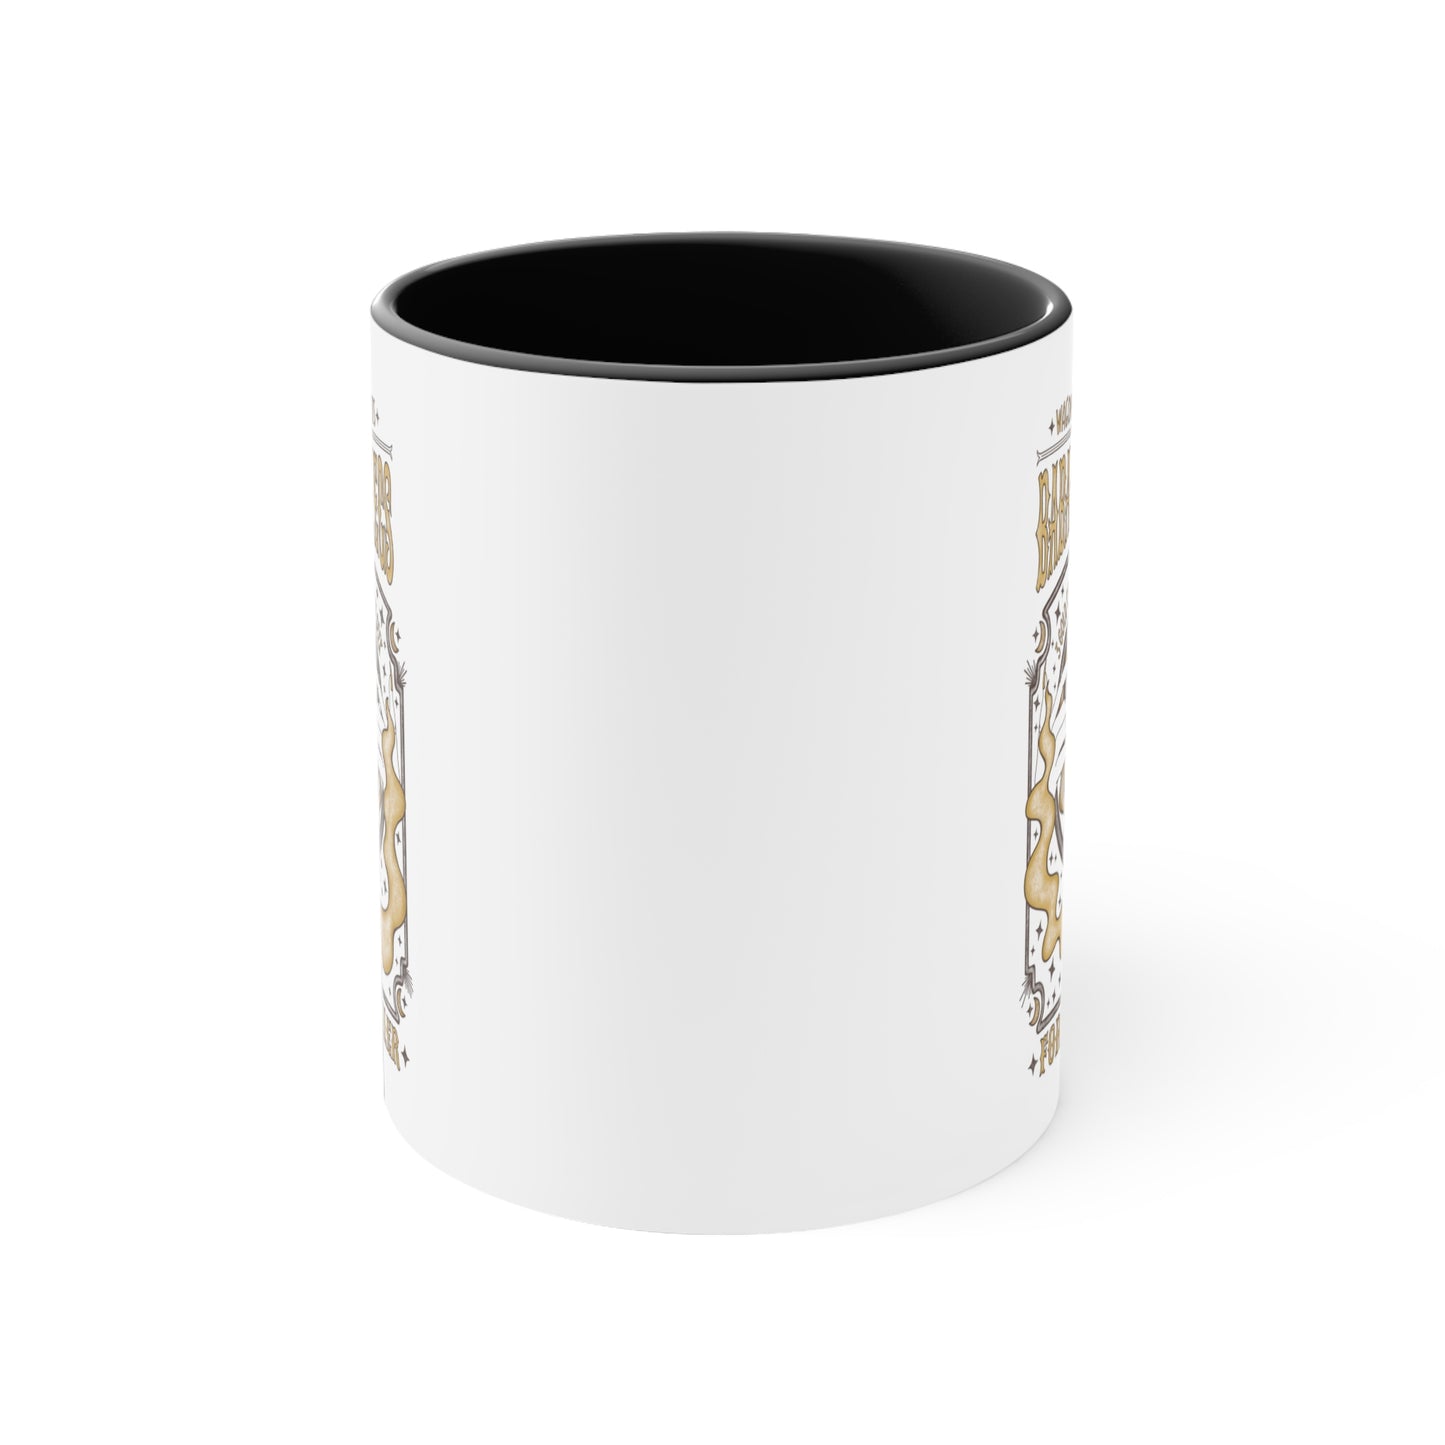 Baba Yellowlegs | Licensed Throne of Glass Coffee Mug 11oz